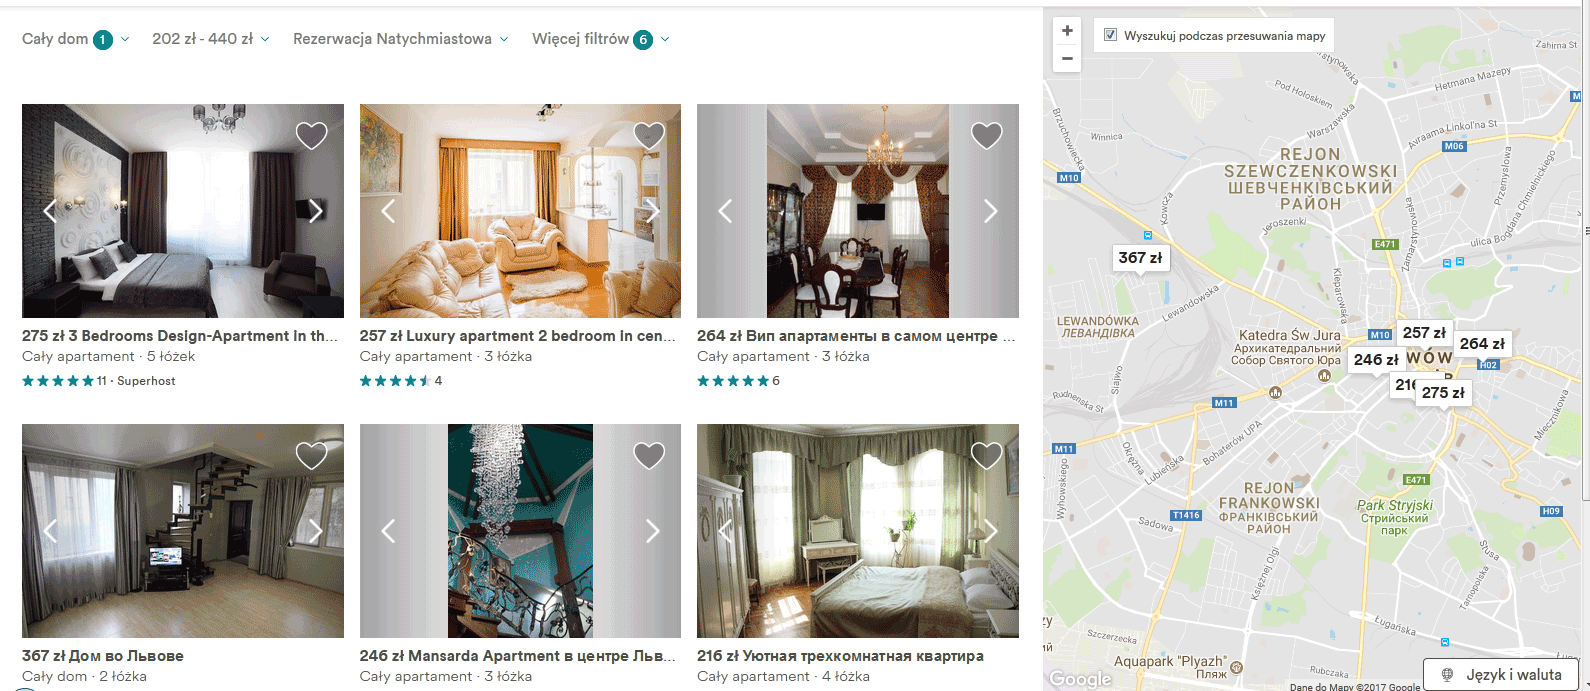 Wynajem na Airbnb - interfejs